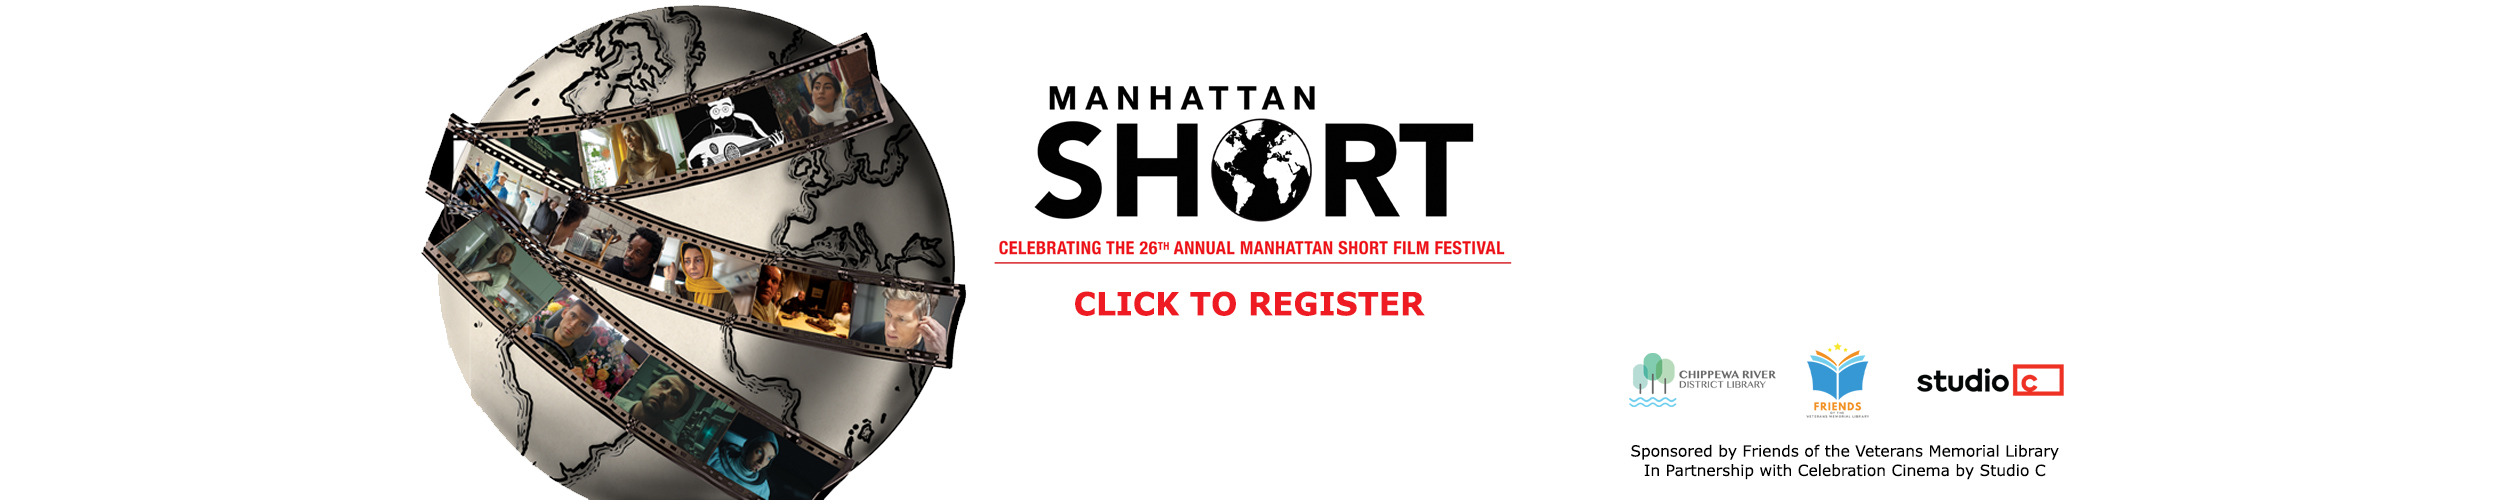 Image of "Manhattan Short"